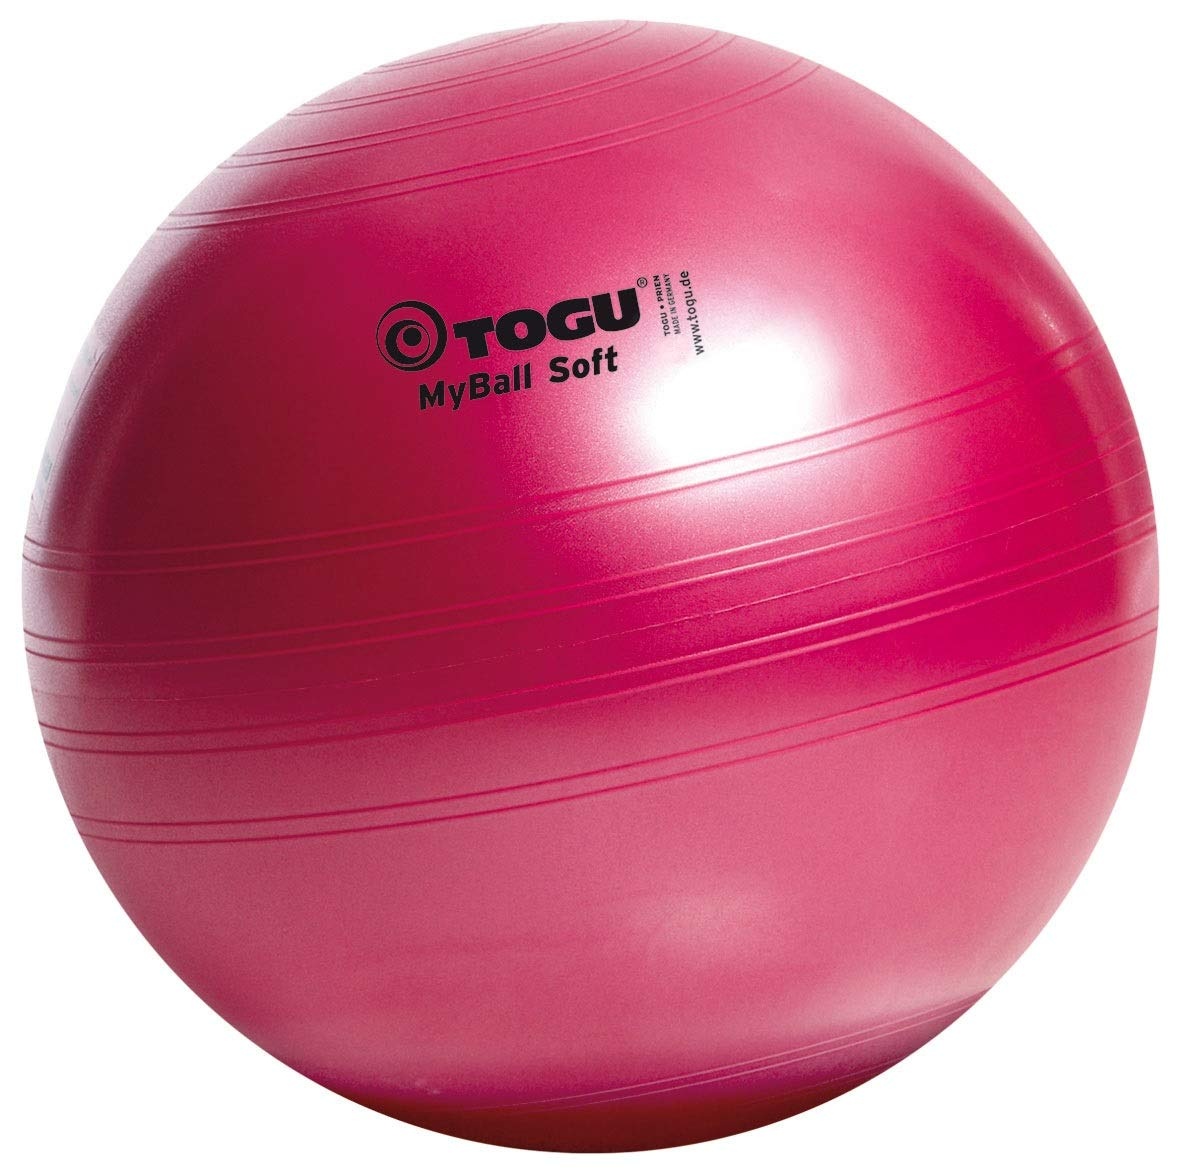 Bild Gymnastikball My-Ball Soft, rubinrot, 65 cm, 418652